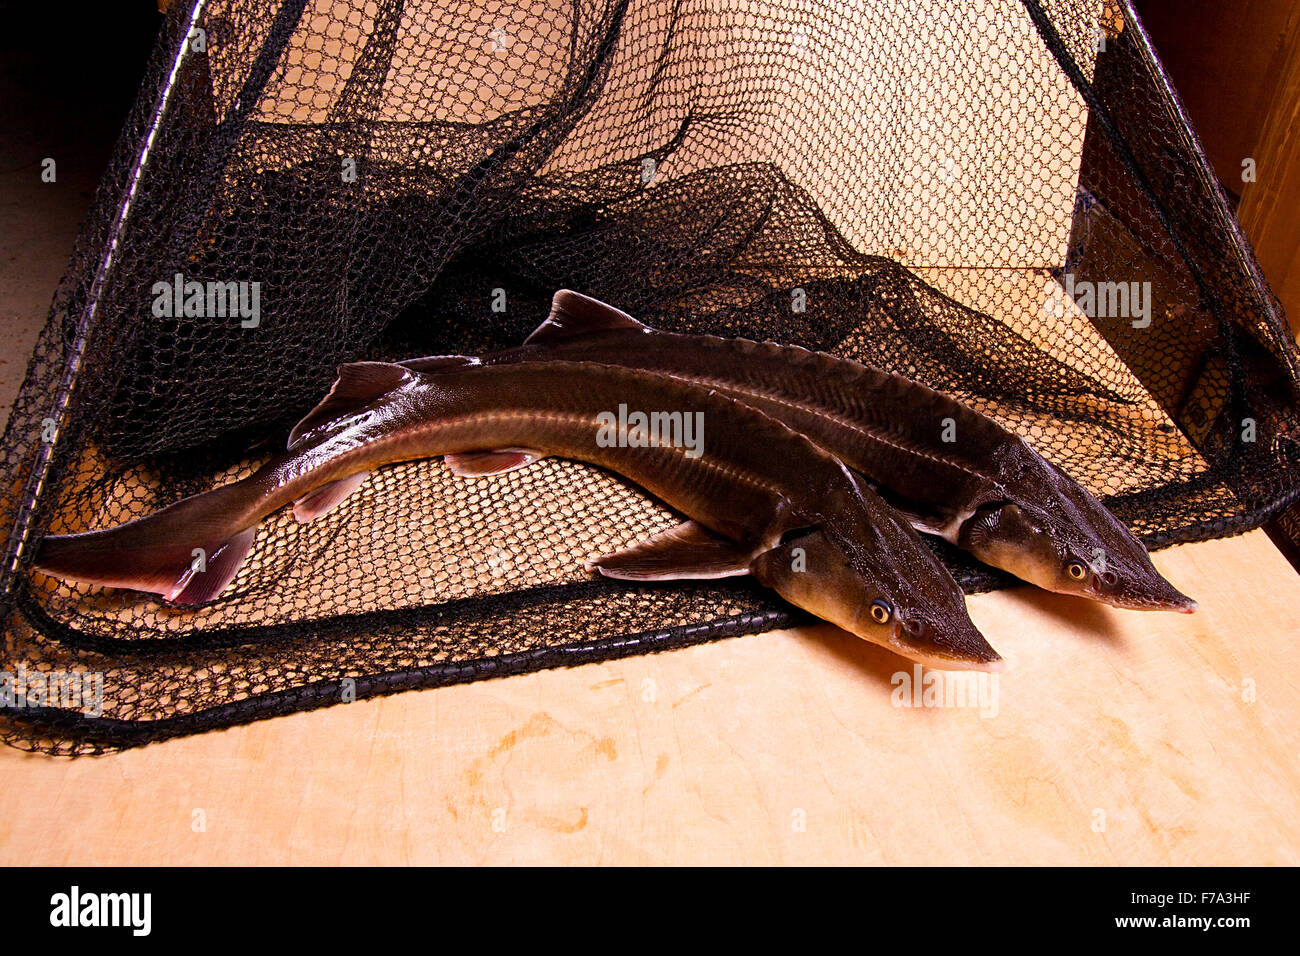 https://c8.alamy.com/comp/F7A3HF/fresh-small-sturgeon-fish-on-black-fishing-net-fresh-sterlet-fish-F7A3HF.jpg